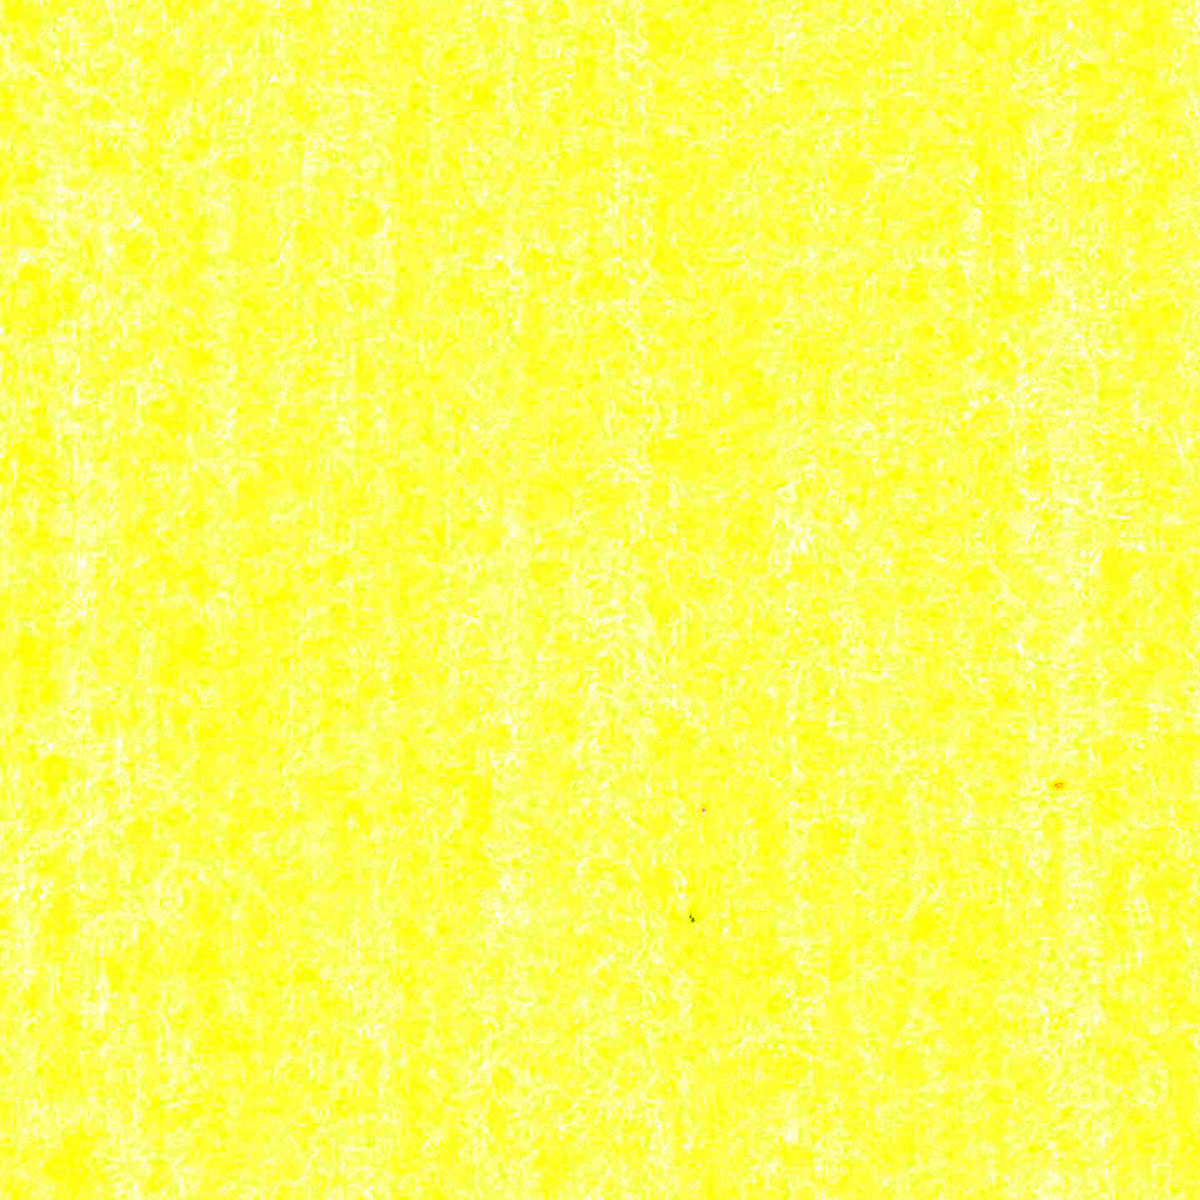 https://colourlex.com/wp-content/uploads/2021/02/chrome-yellow-painted-swatch.jpg